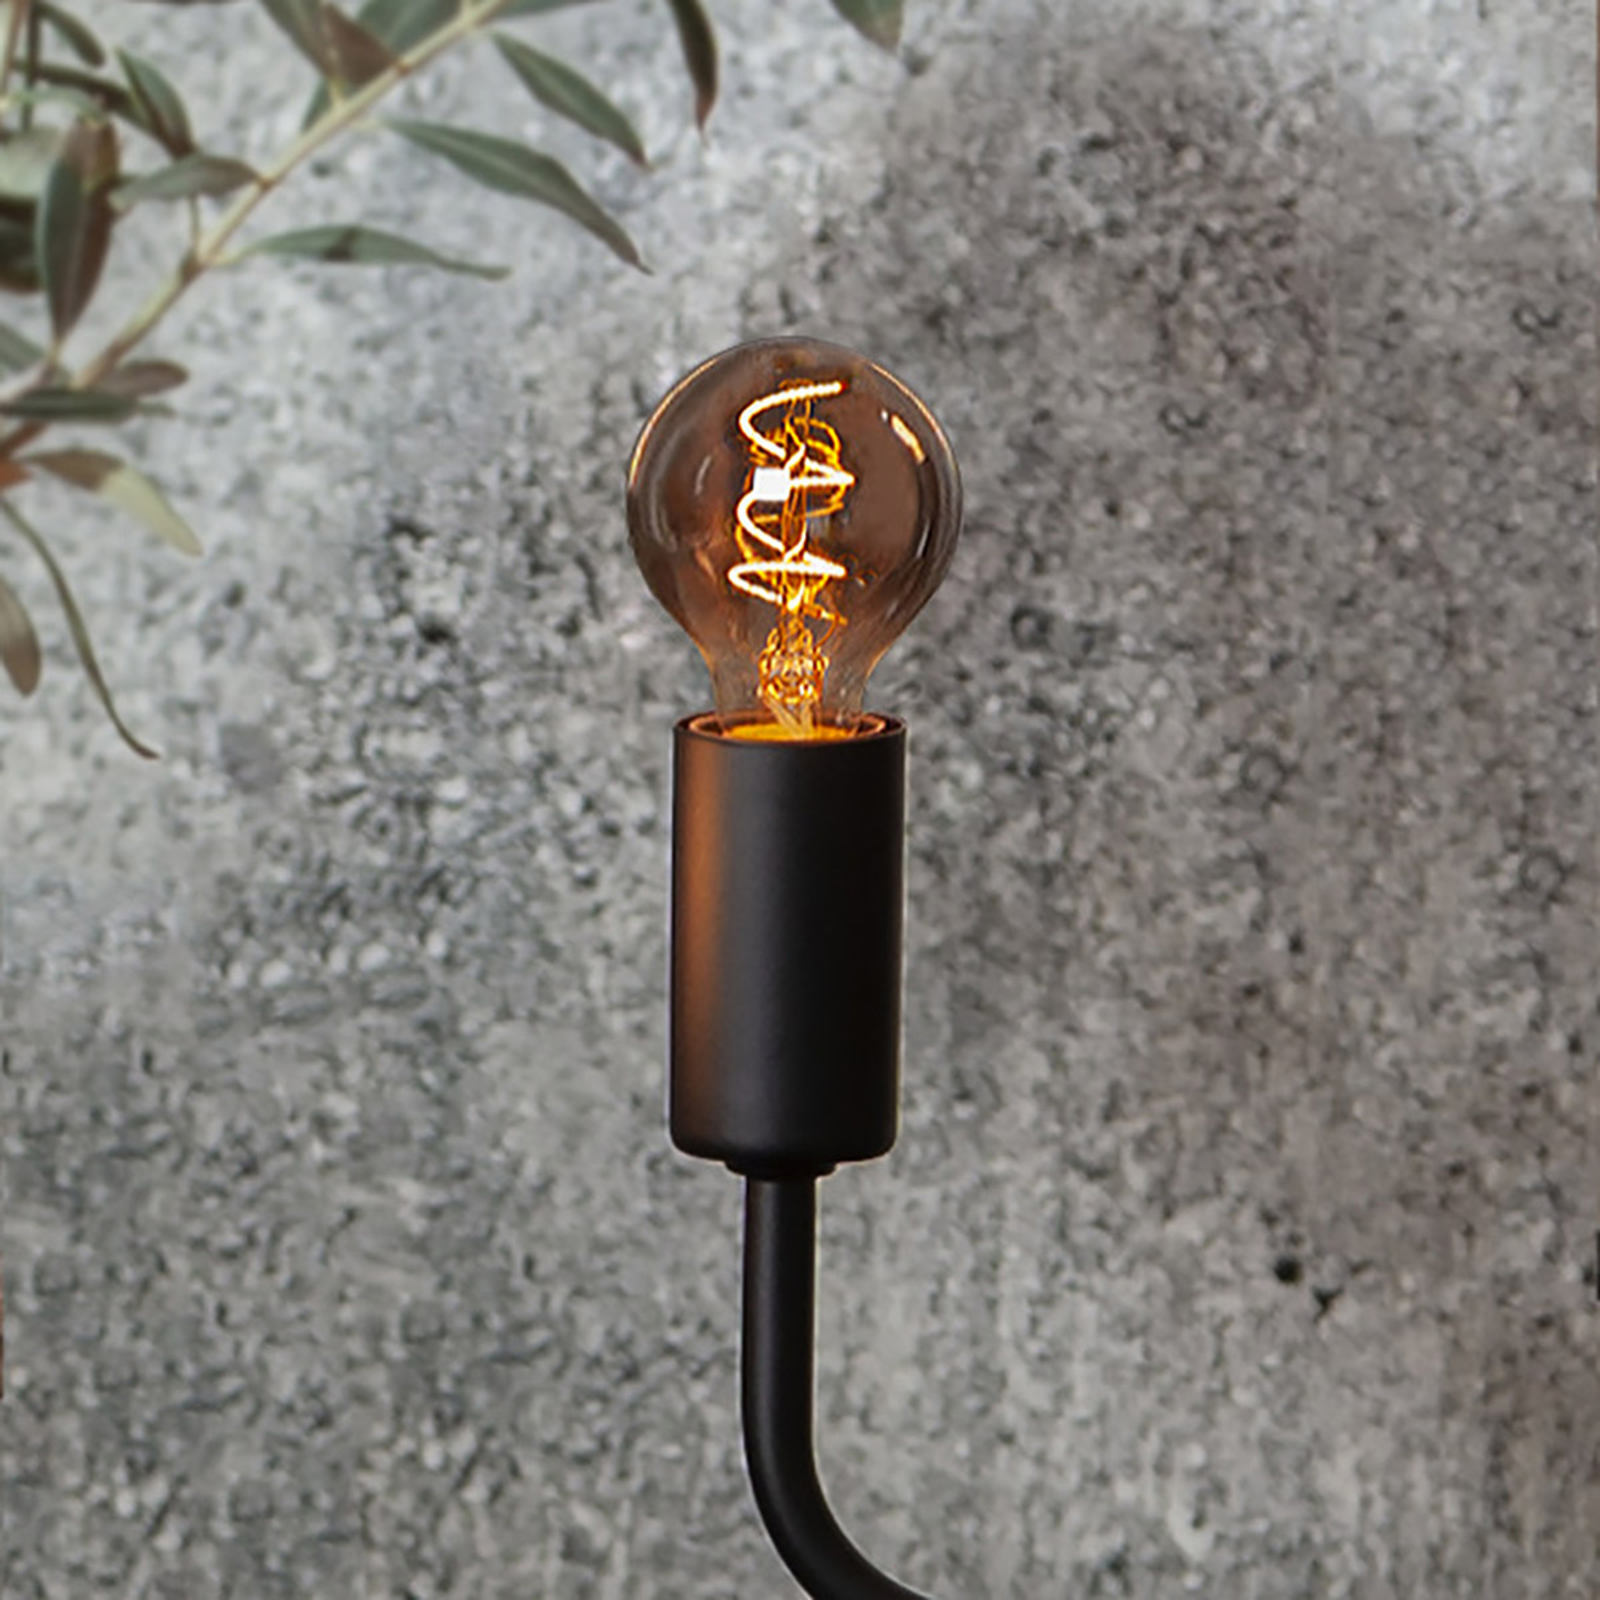 LED bulb P45 E14 3W 1,800 K smoky grey